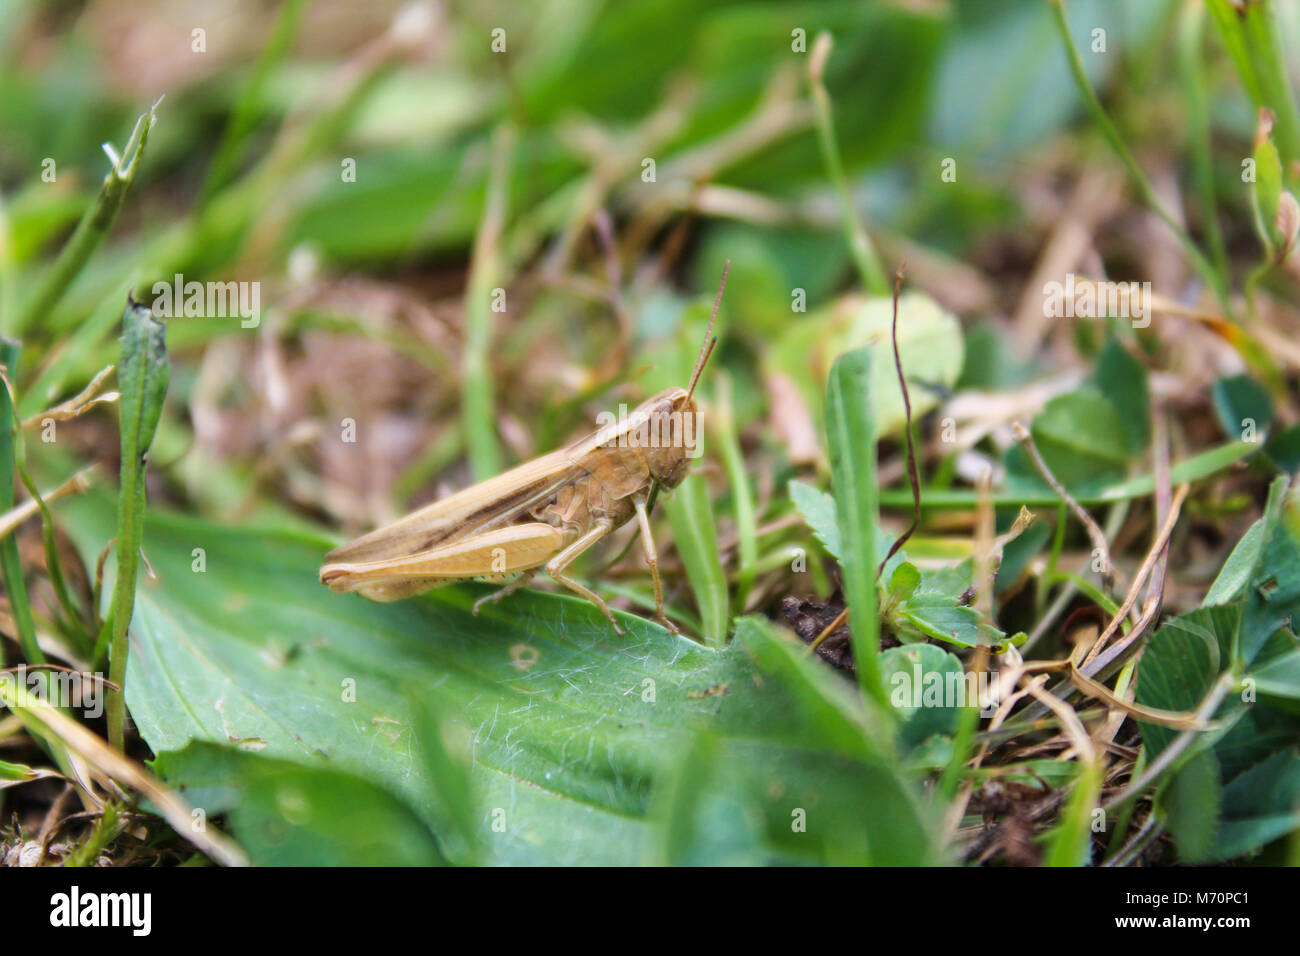 Chorthippus albomarginatus, grasshopper from side, macro photo Stock Photo